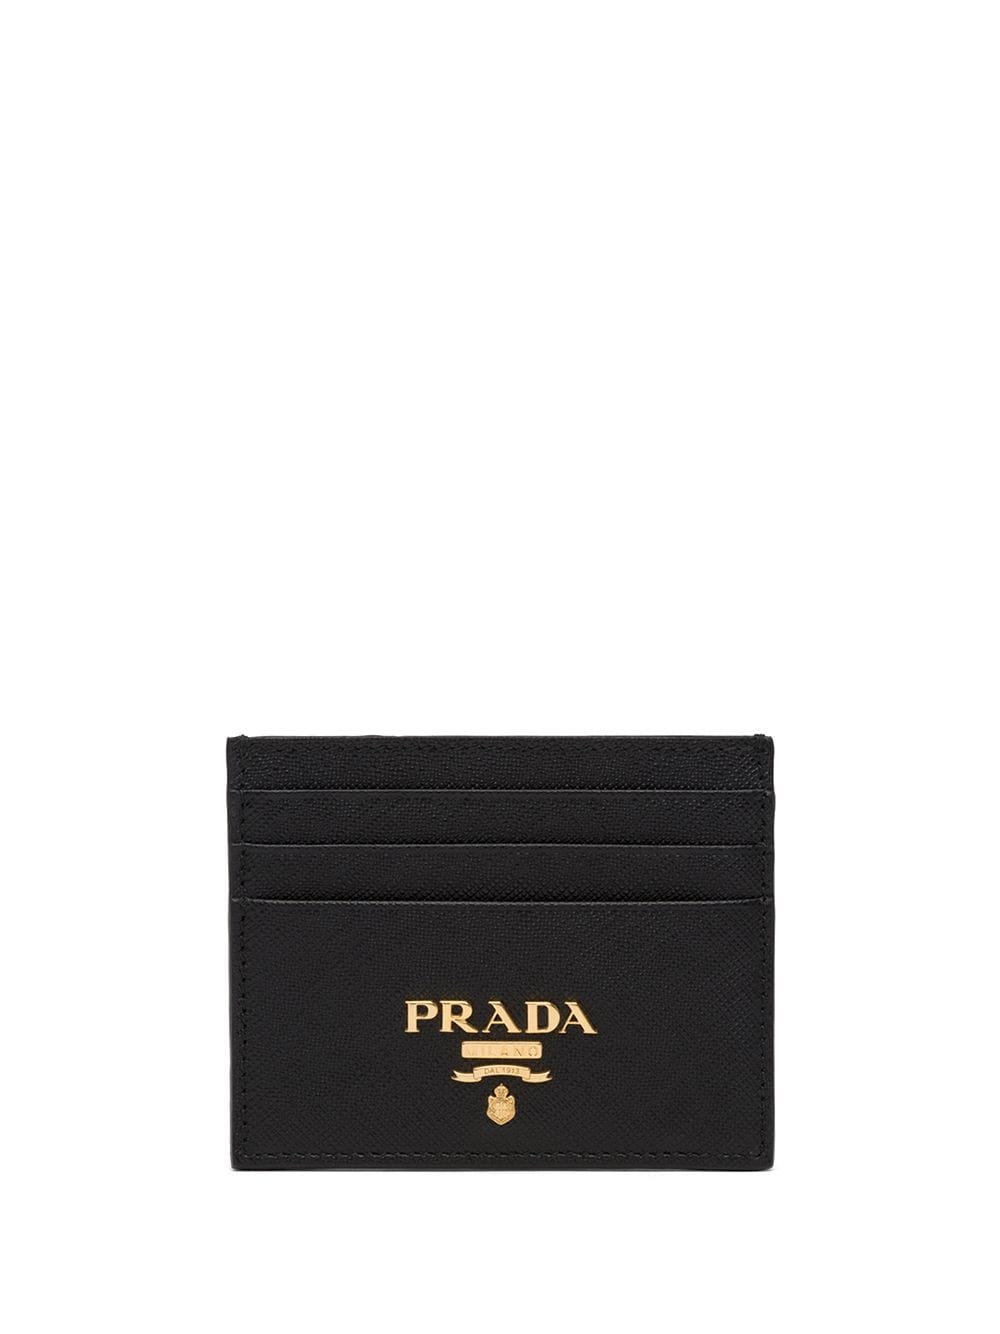 Prada compact front logo cardholder - Black von Prada